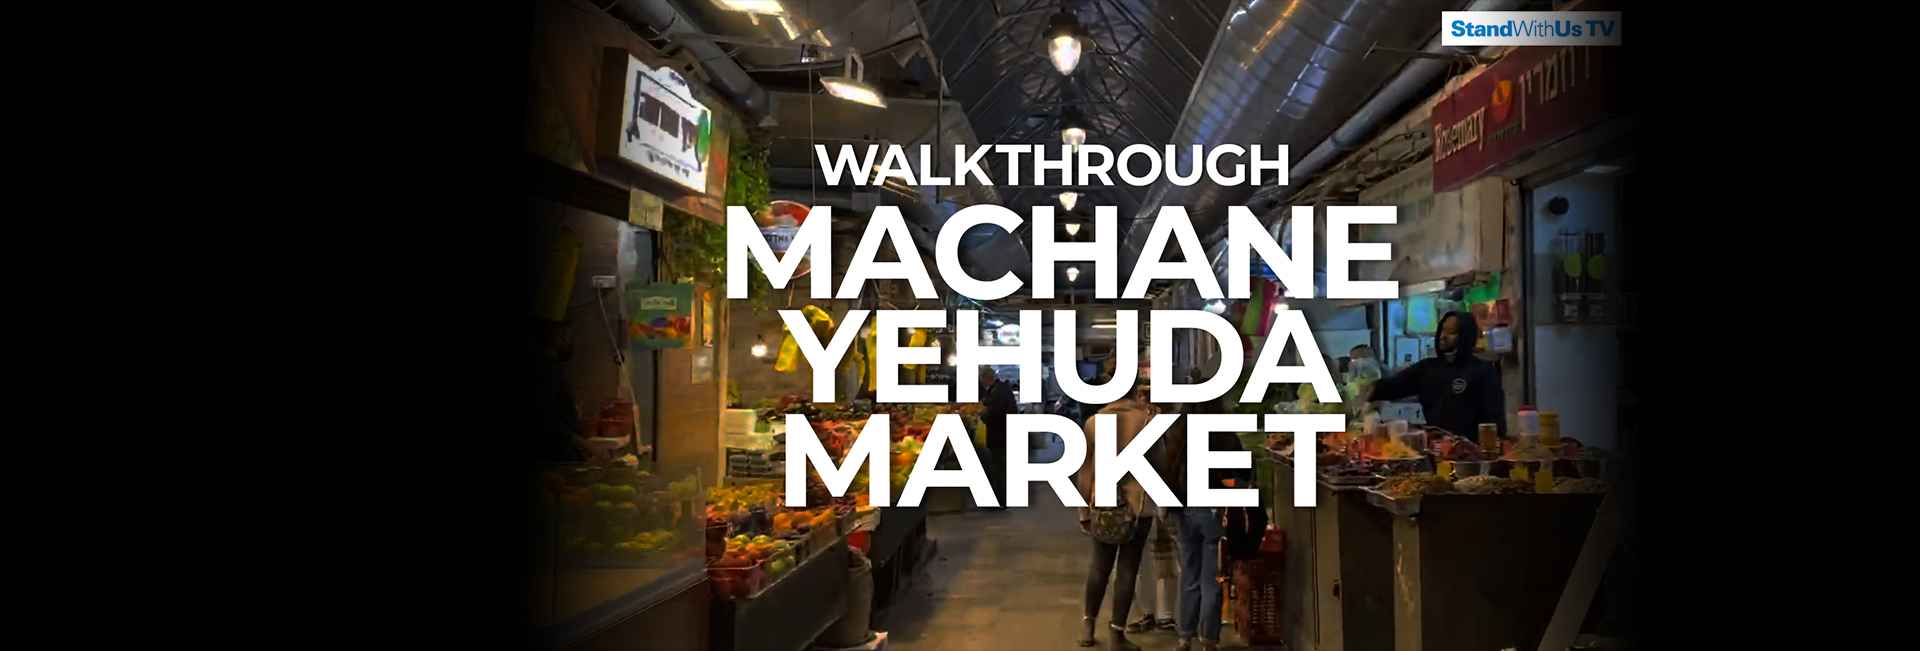 Machane Yehuda Market | WalkThrough